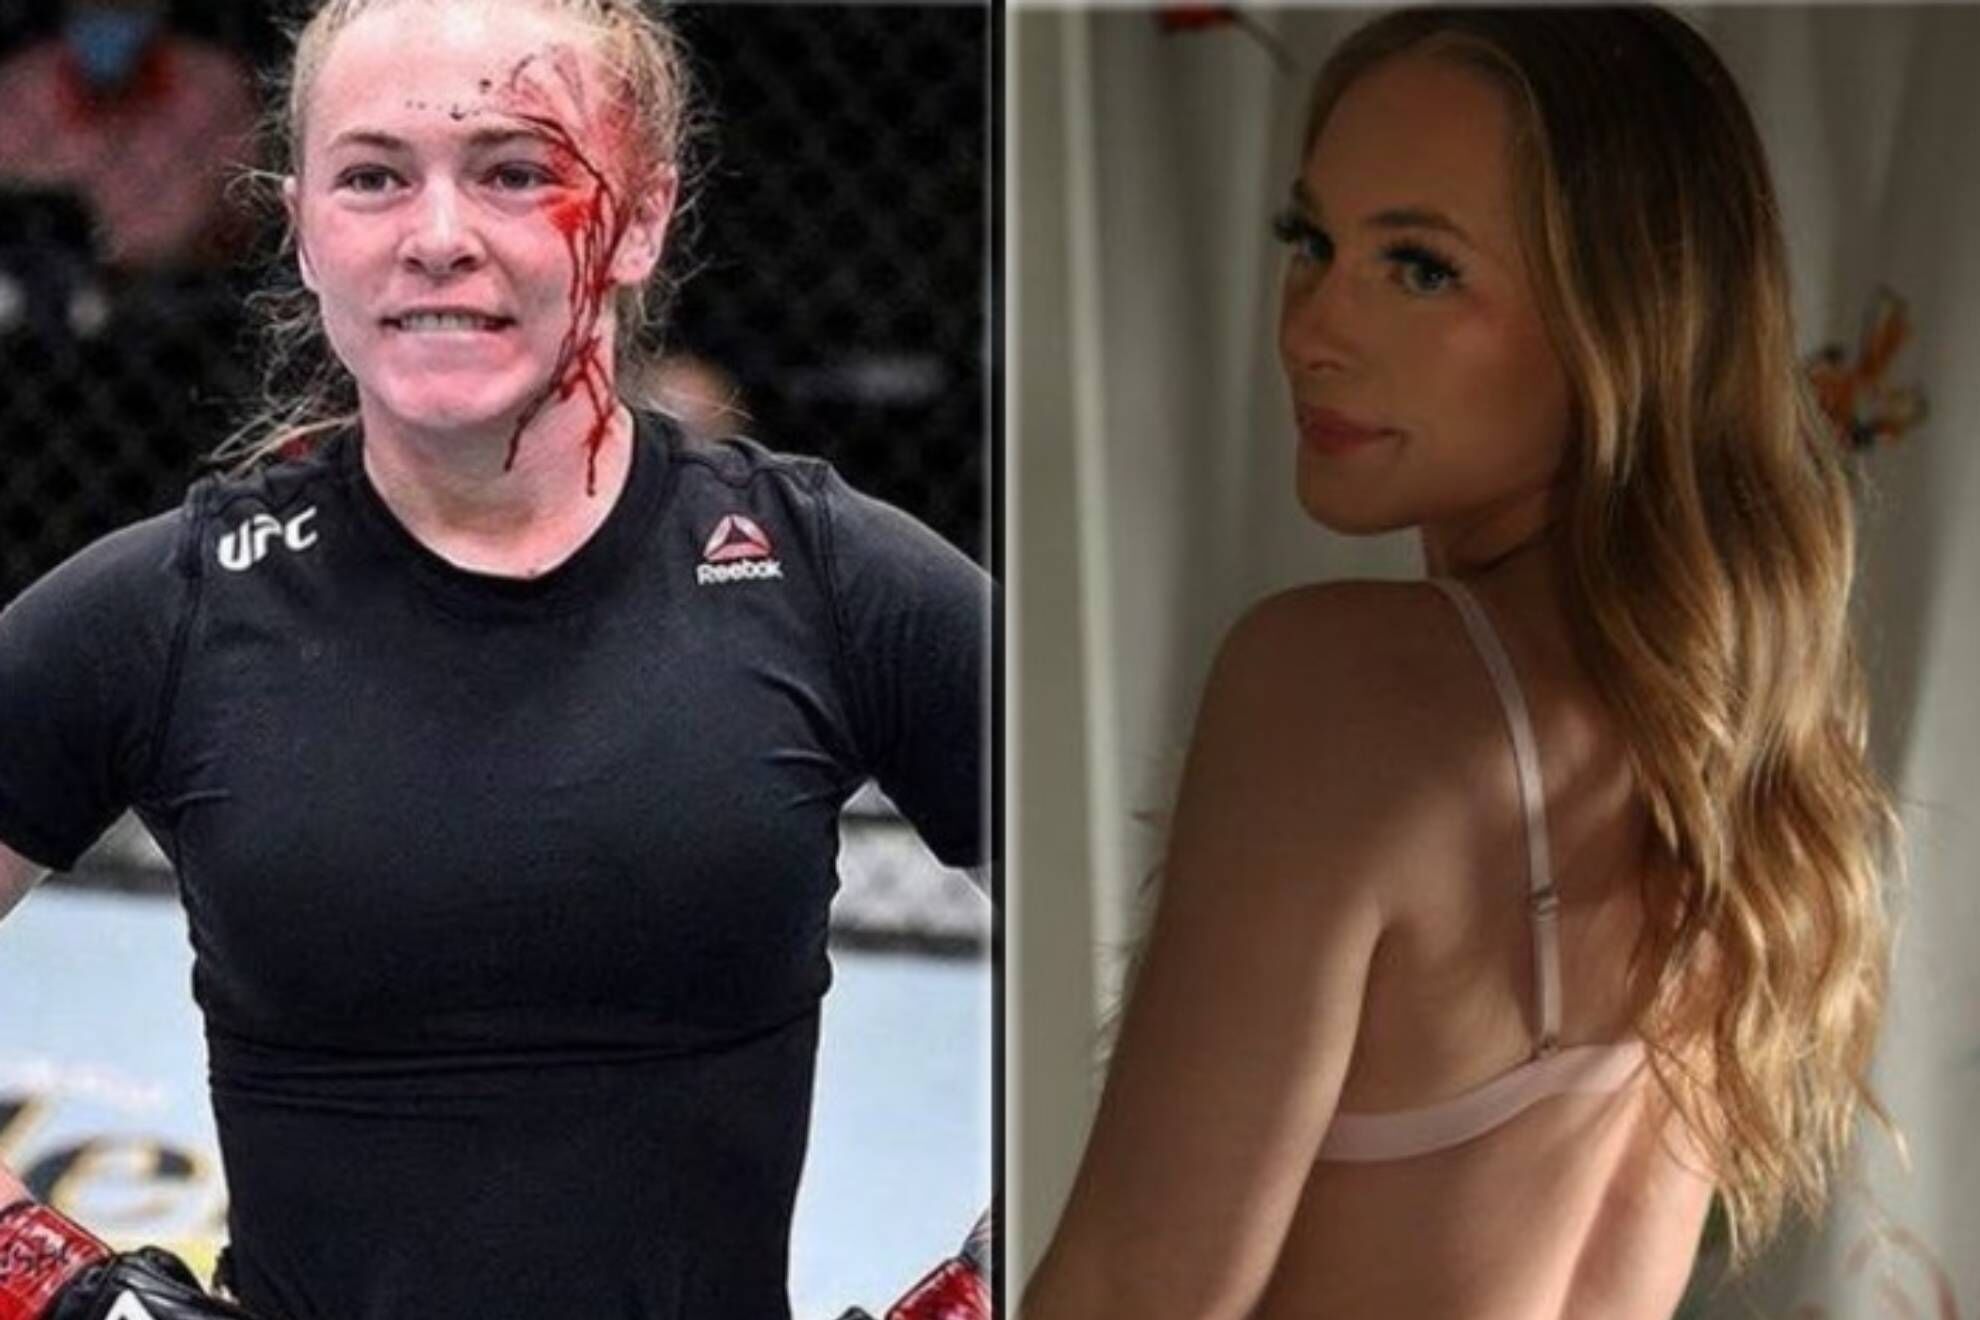 Kay Hansen, la luchadora de MMA que tiene que publicar contenidos sin censuras en OnlyFans para poder entrenar